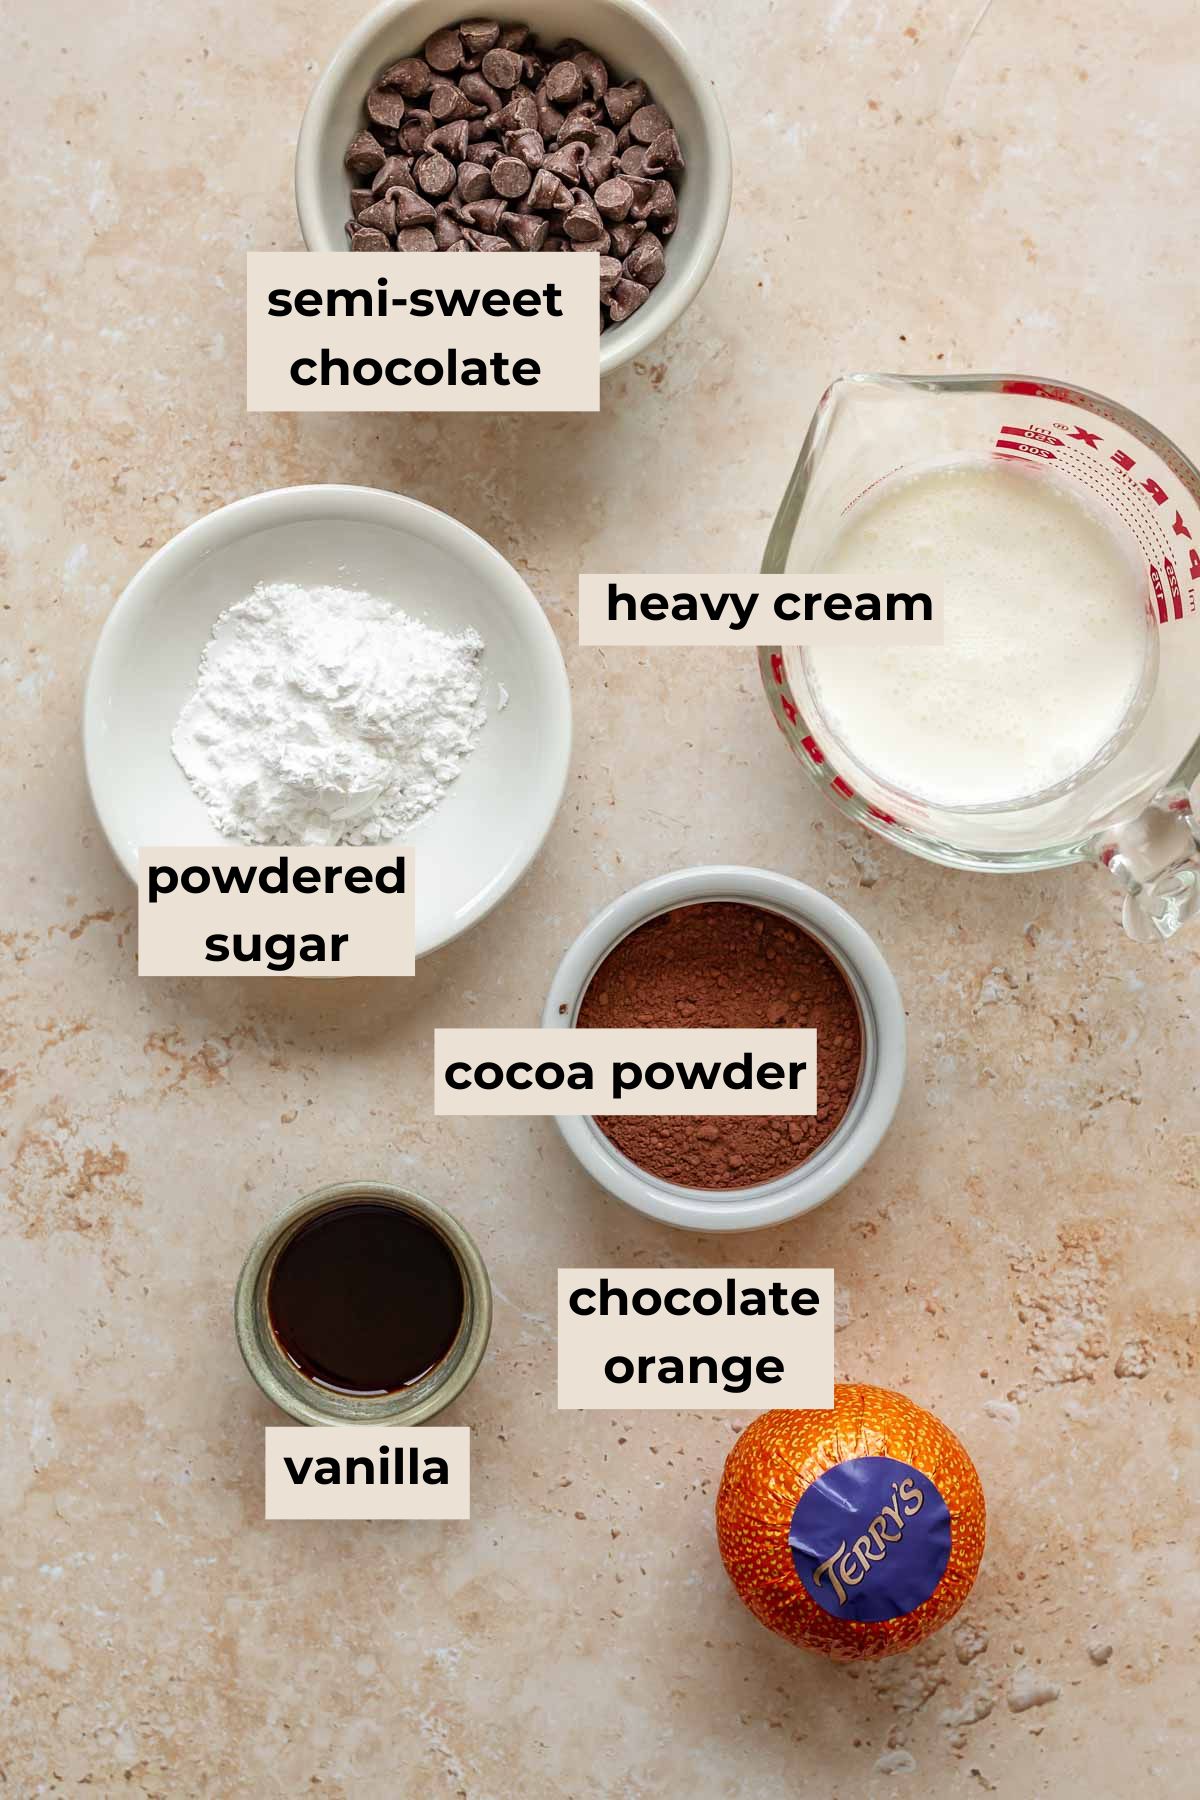 Chocolate orange cheesecake topping ingredients.